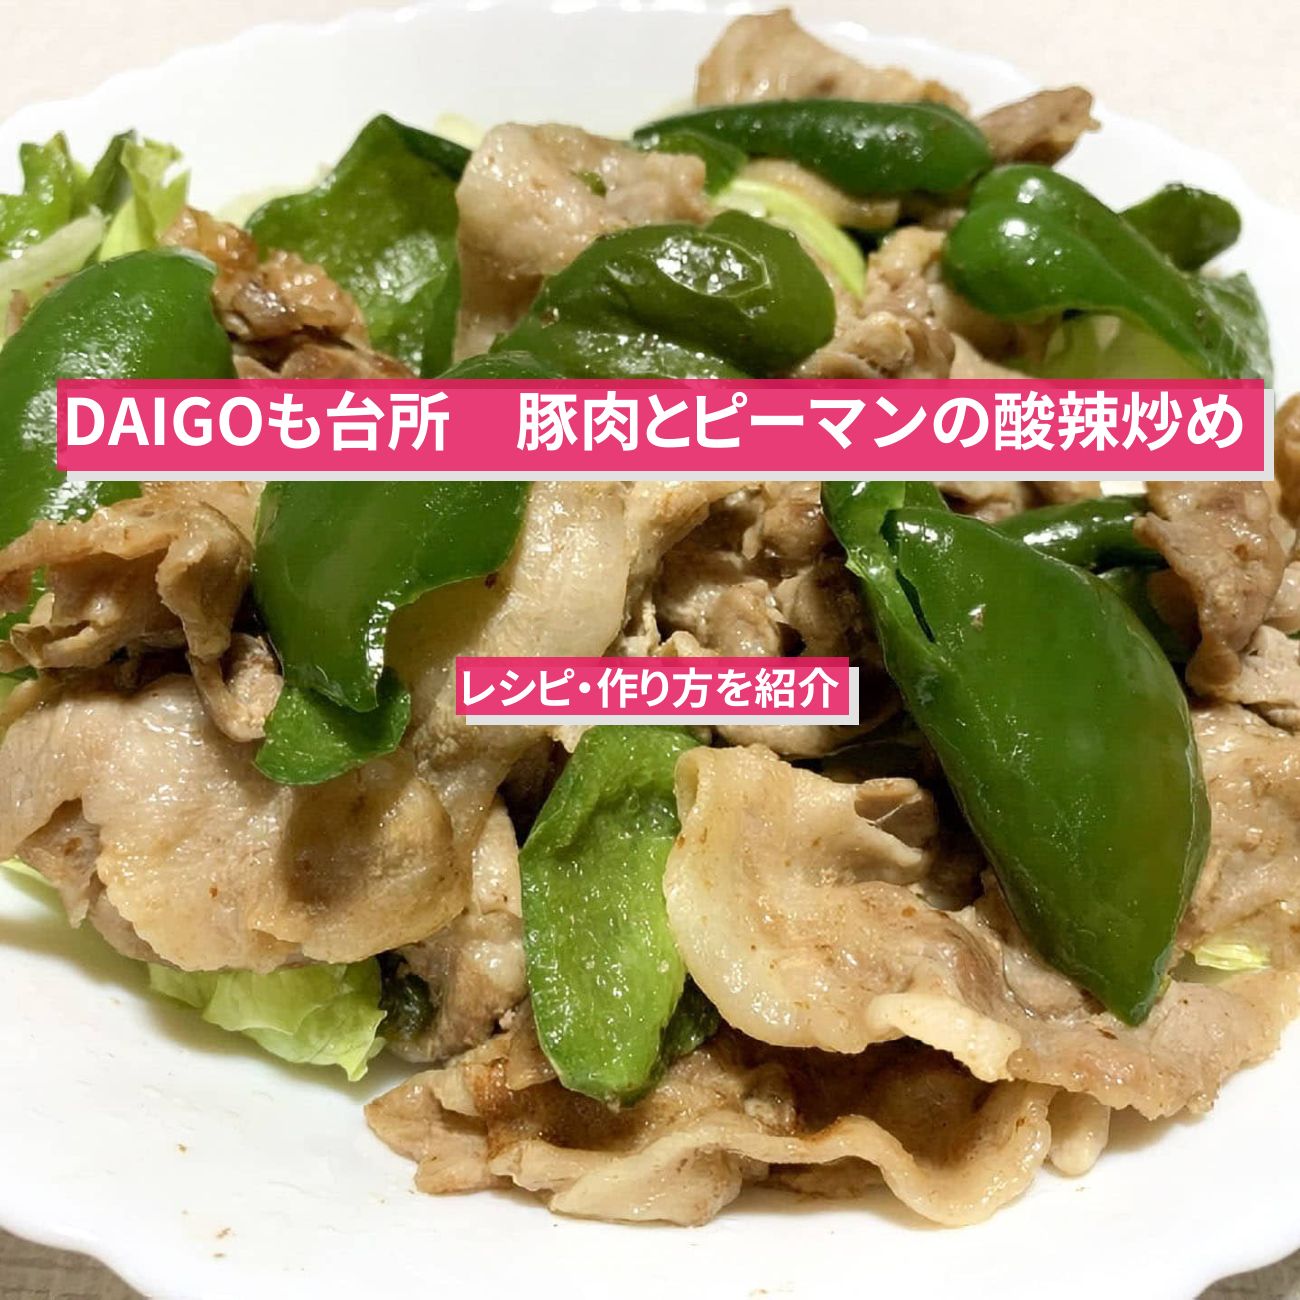 【DAIGOも台所】『豚肉とピーマンの酸辣炒め』のレシピ・作り方を紹介〔ダイゴも台所〕